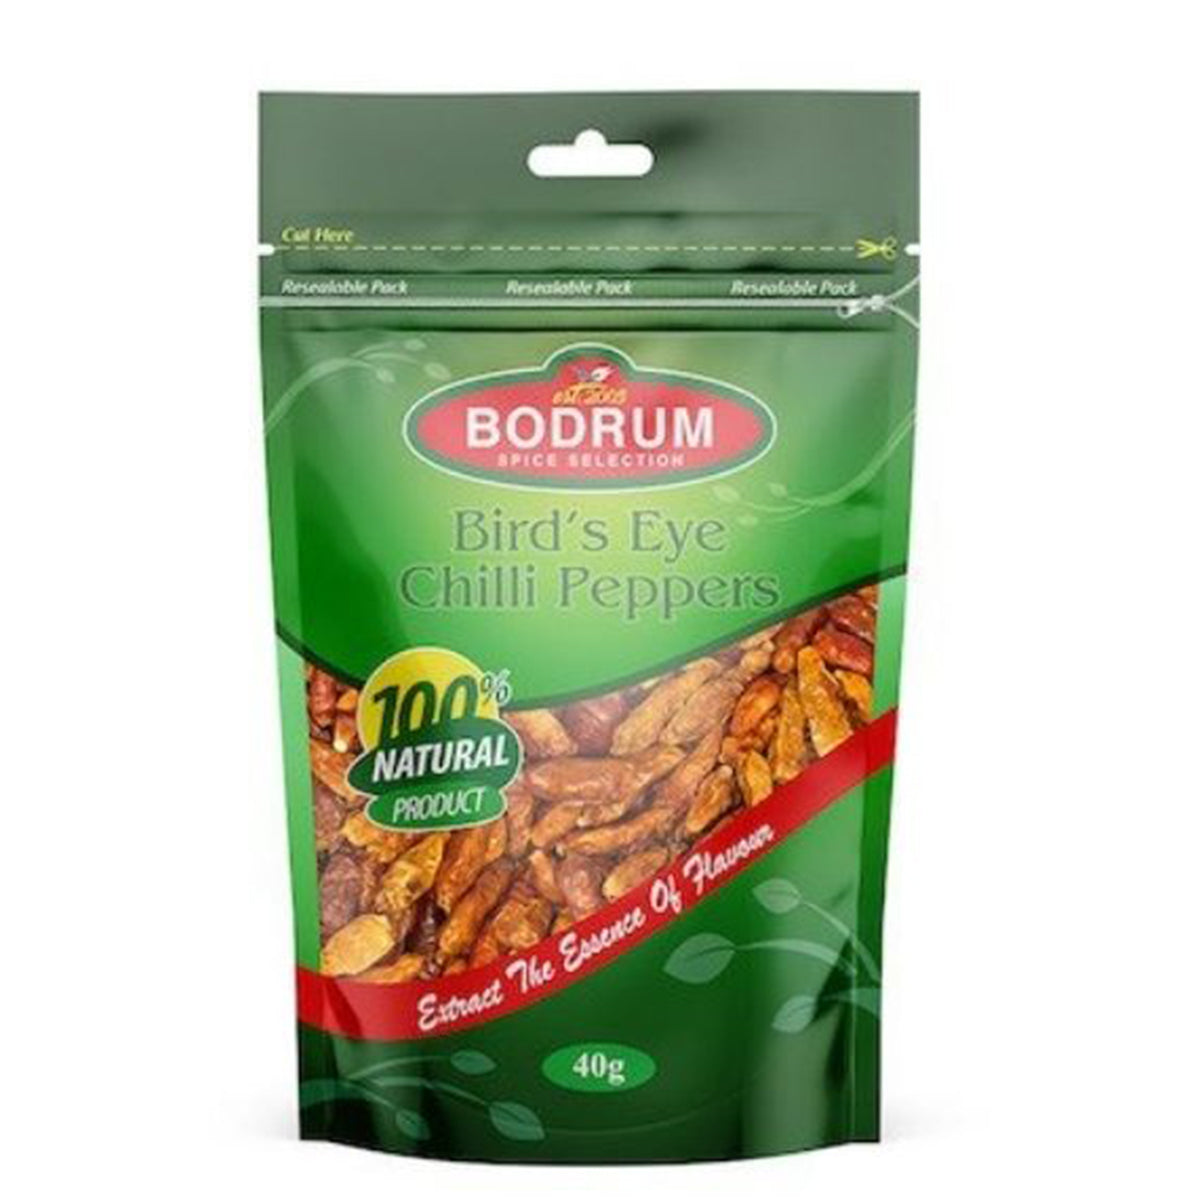 Bodrum - Birds Eye Chilli - 40g chilli peppers.